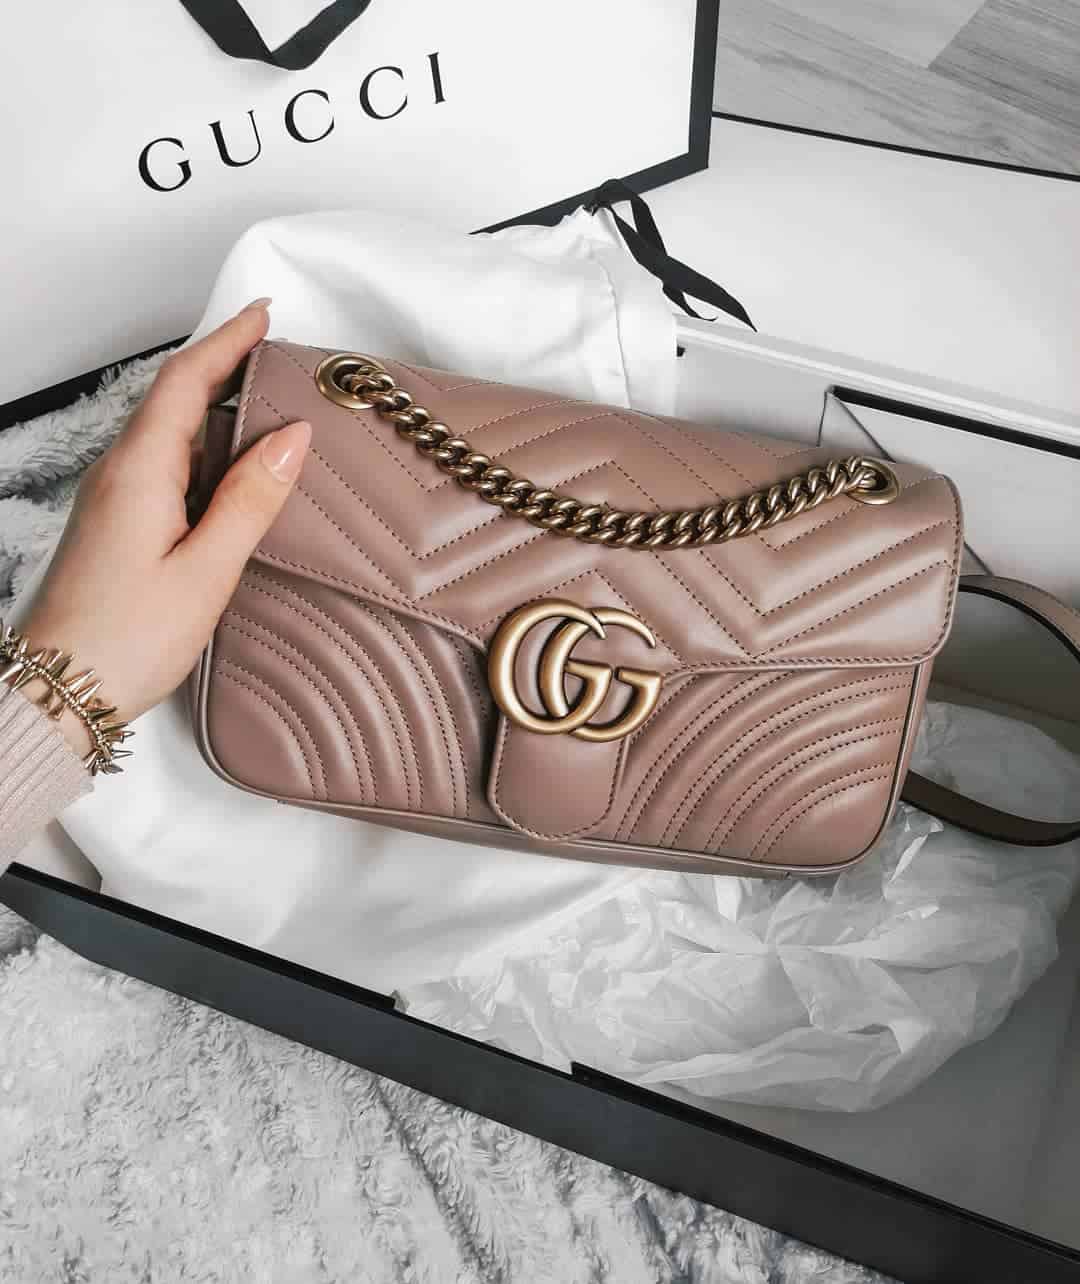 Gucci Marmont Bag pink color